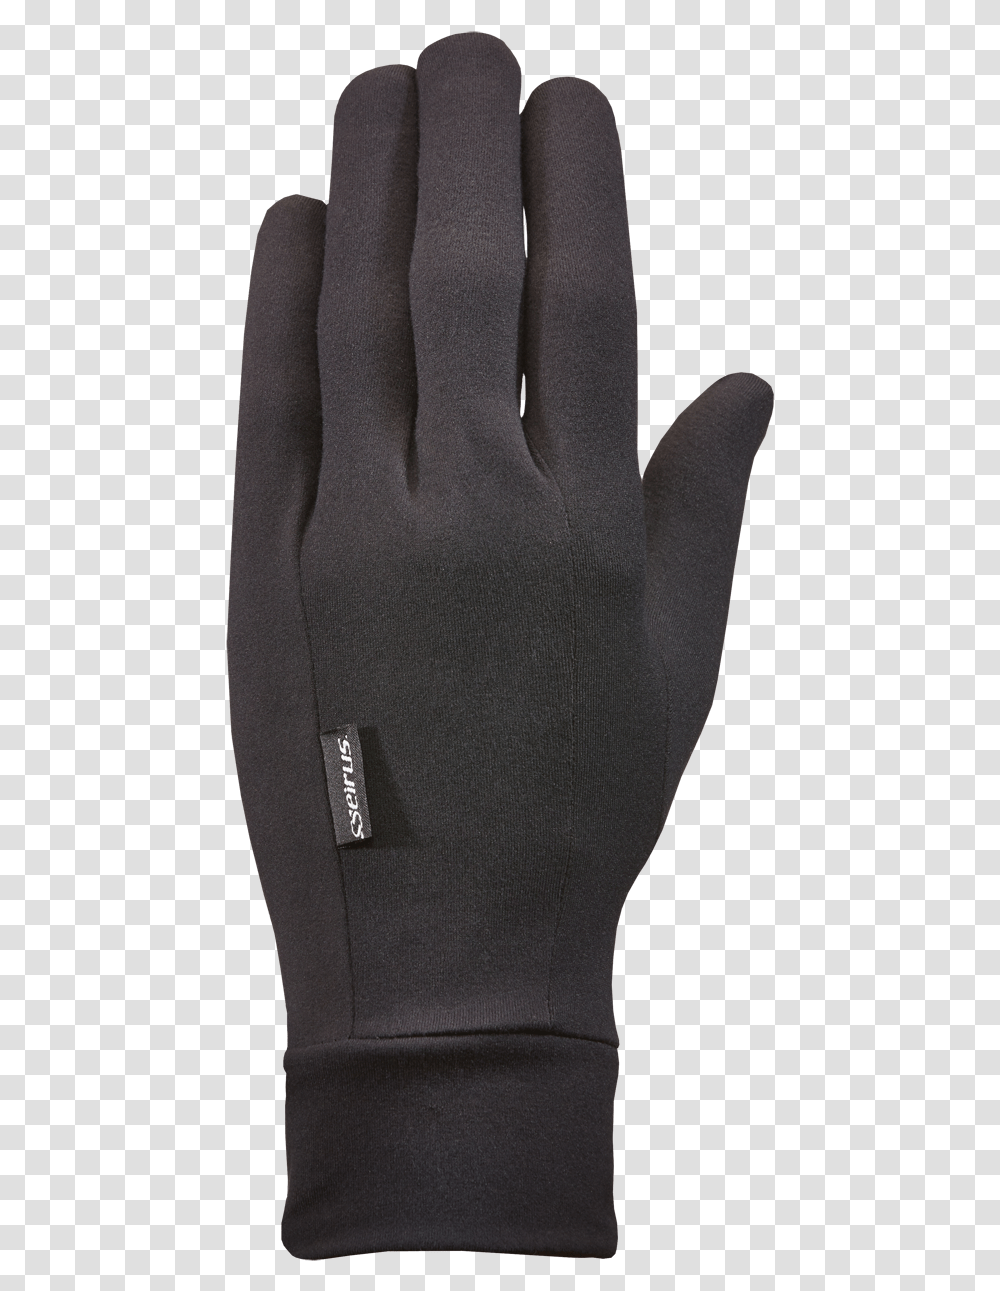 Heat Wave, Apparel, Glove Transparent Png